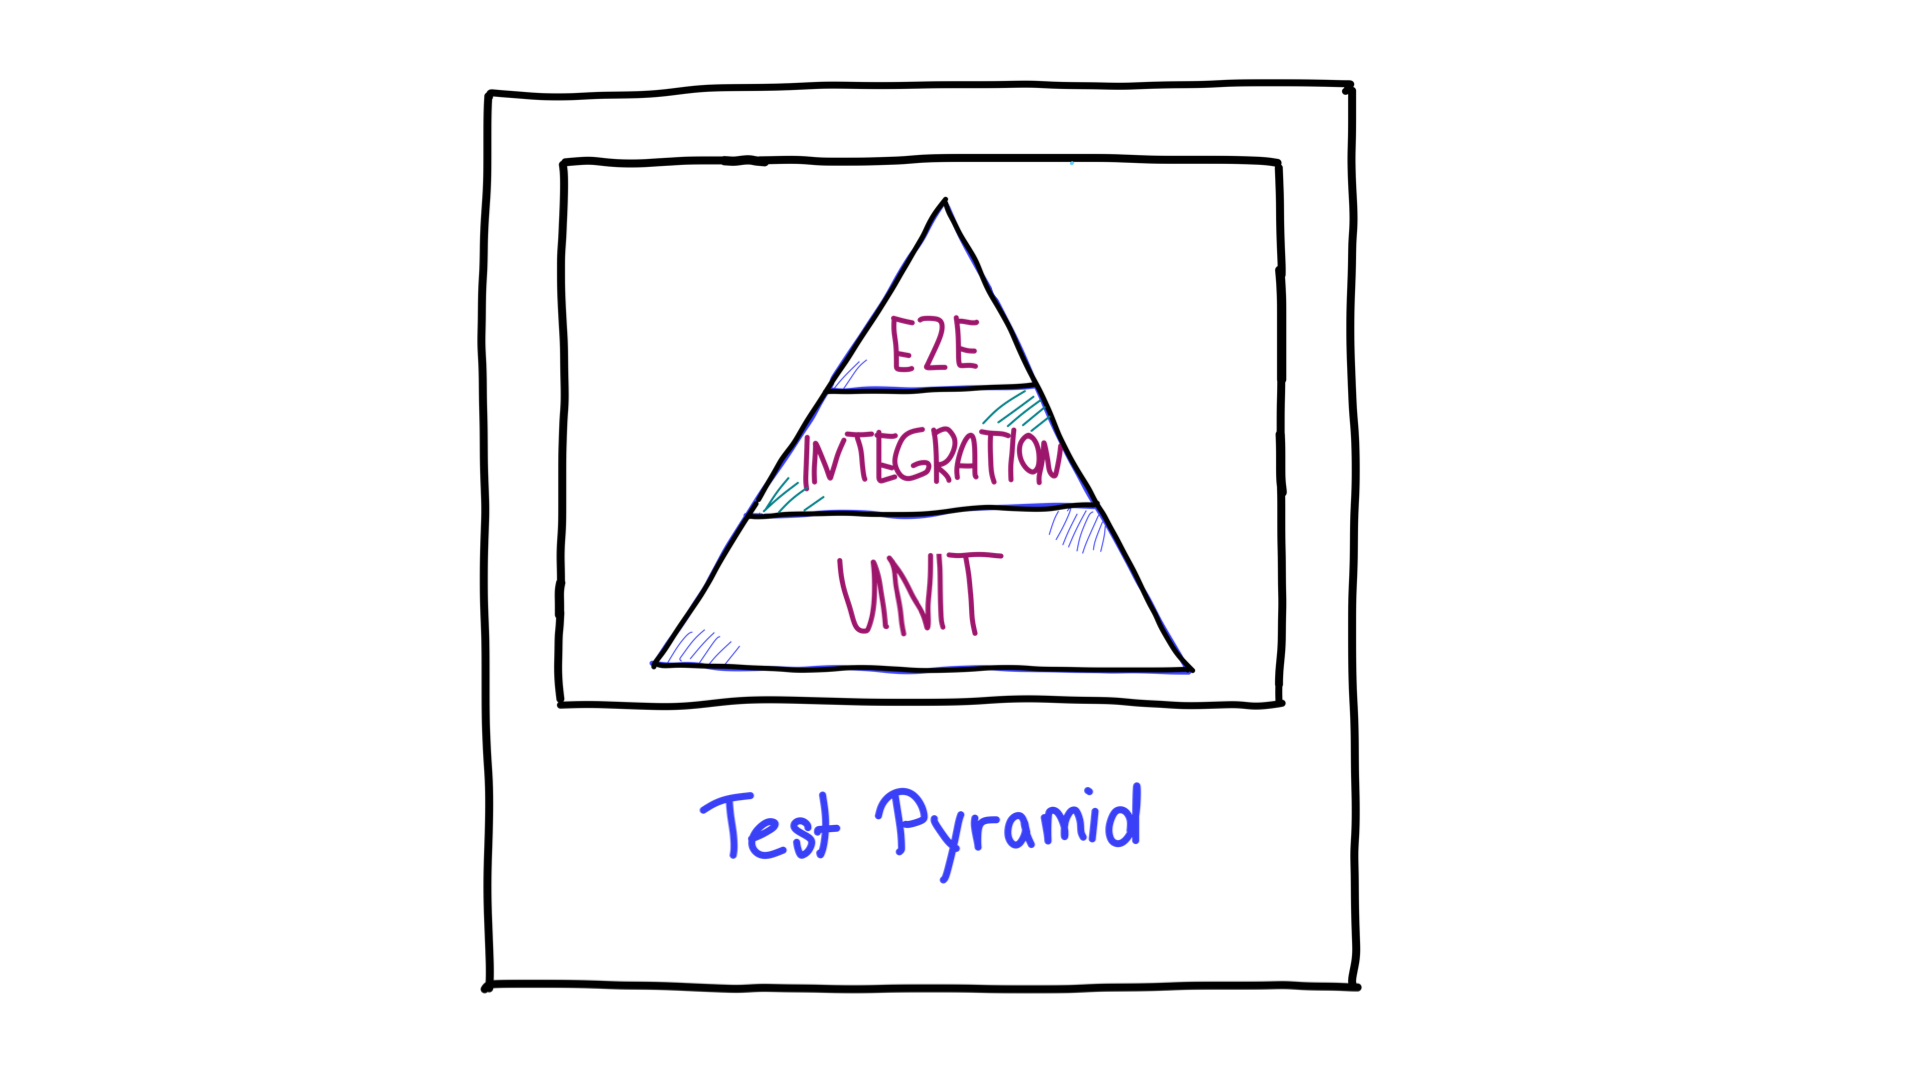 The test pyramid.